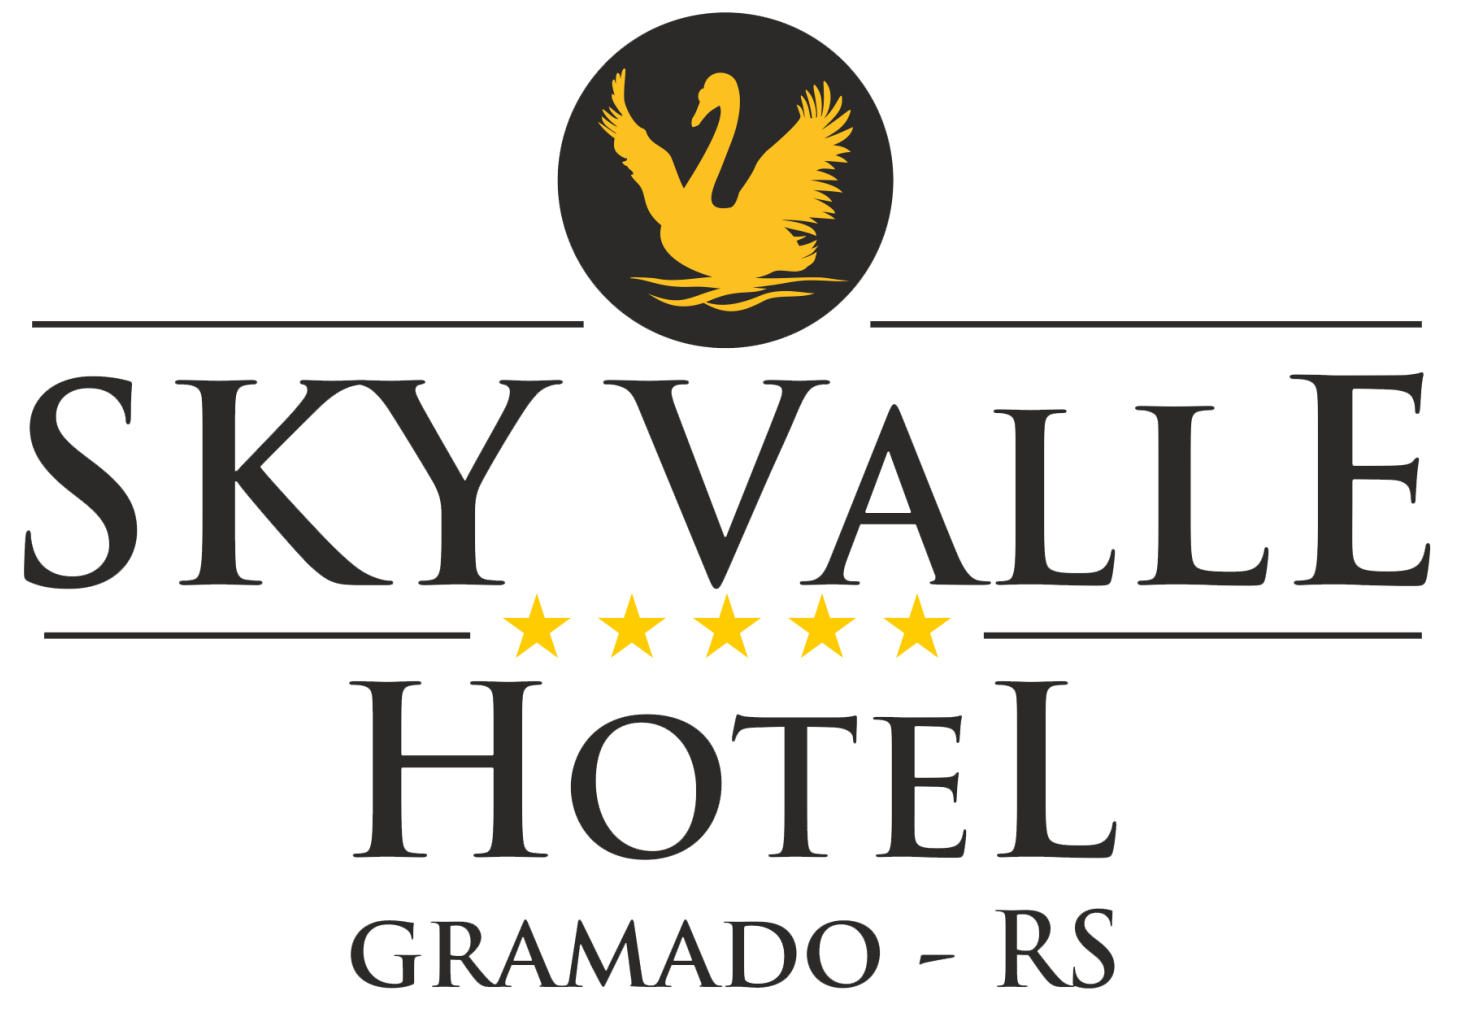 Sky Valle Hotel - Gramado